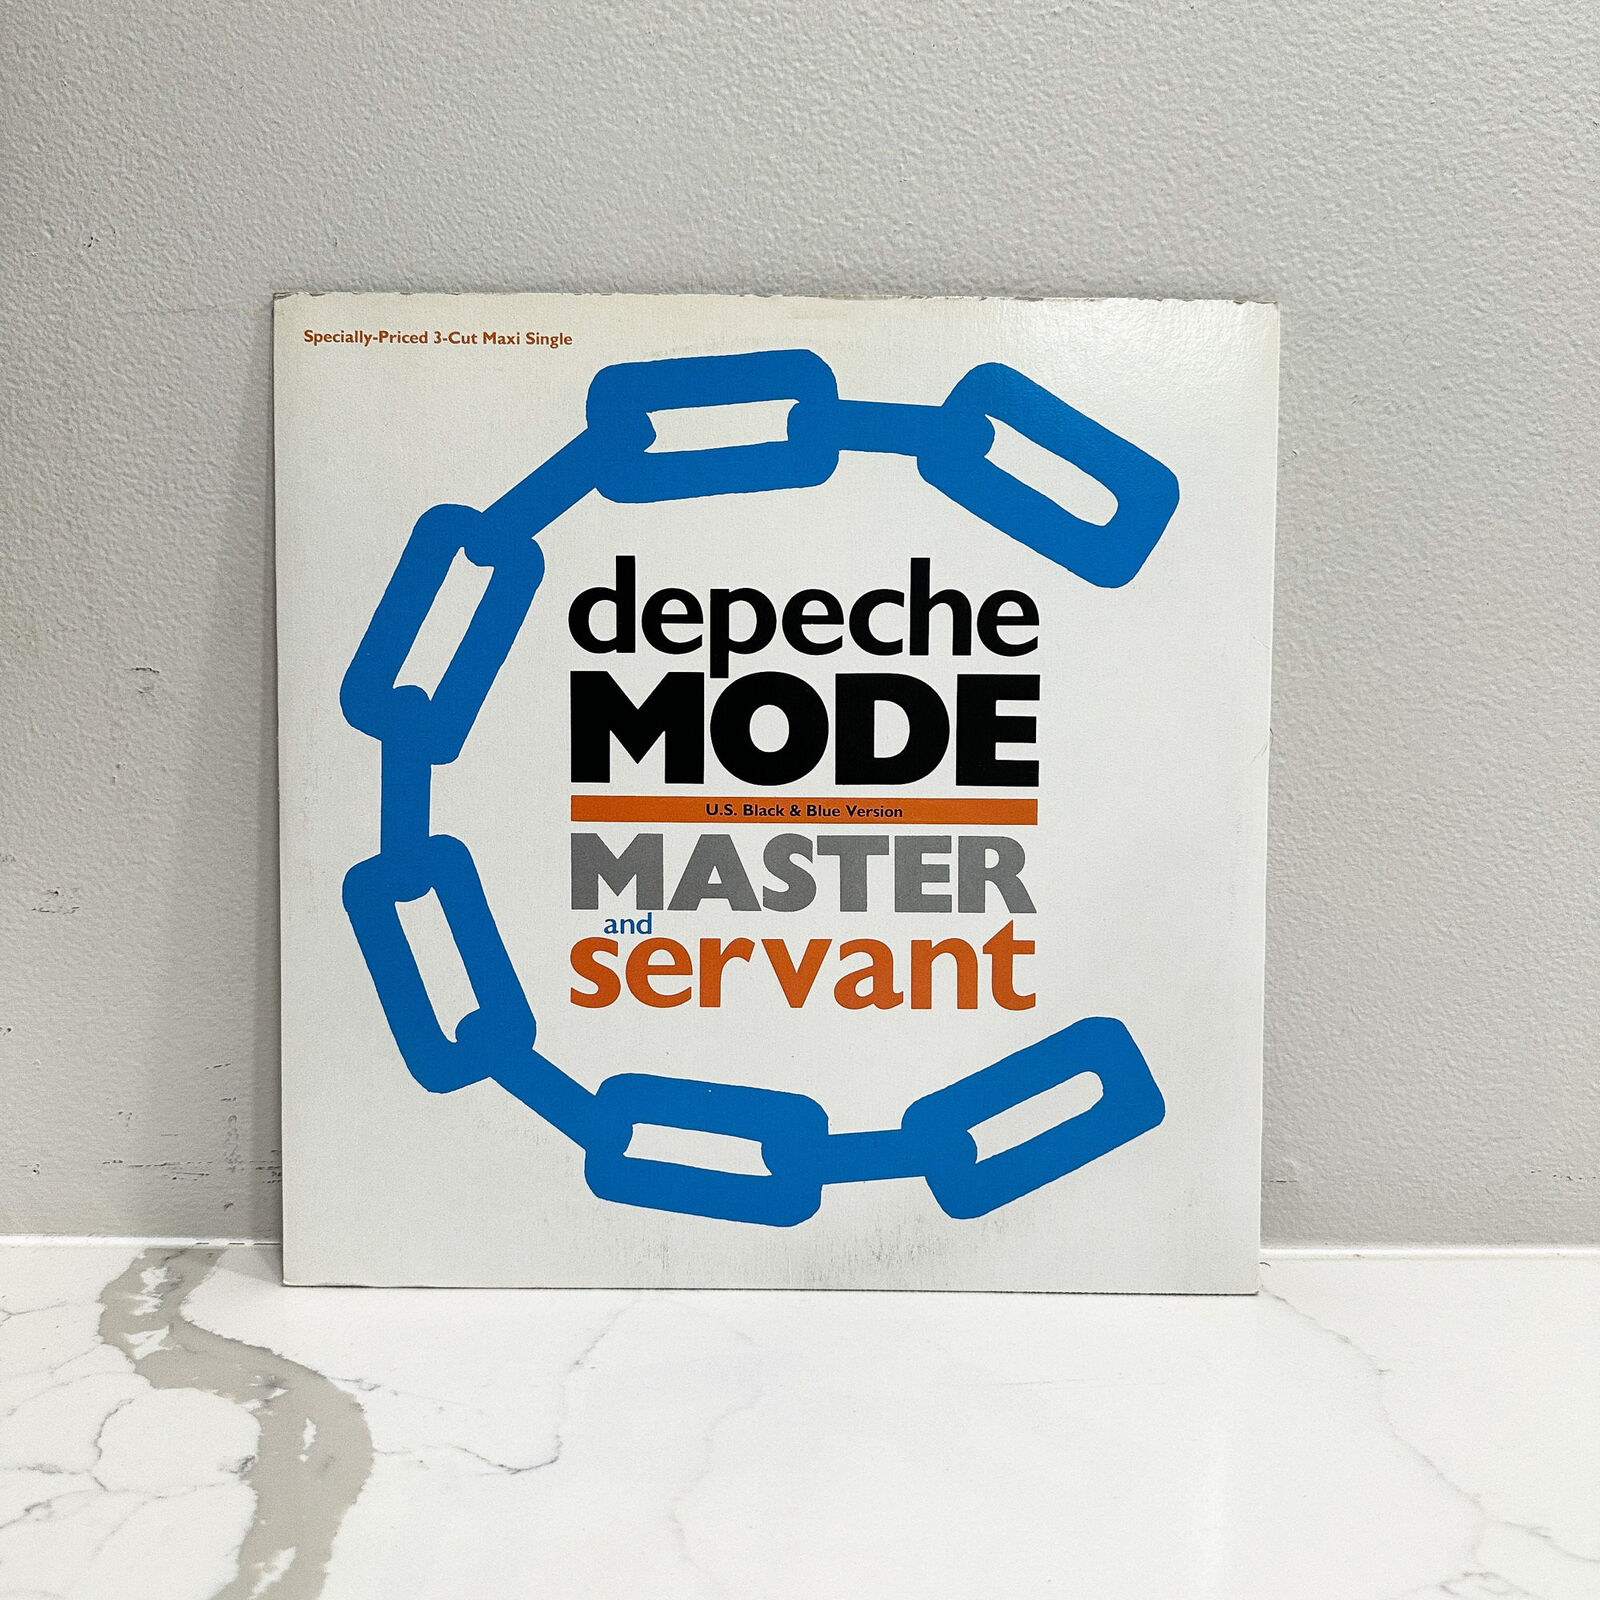 Depeche Mode – Master And Servant (U.S. Black & Blue Version) - Vinyl LP Record